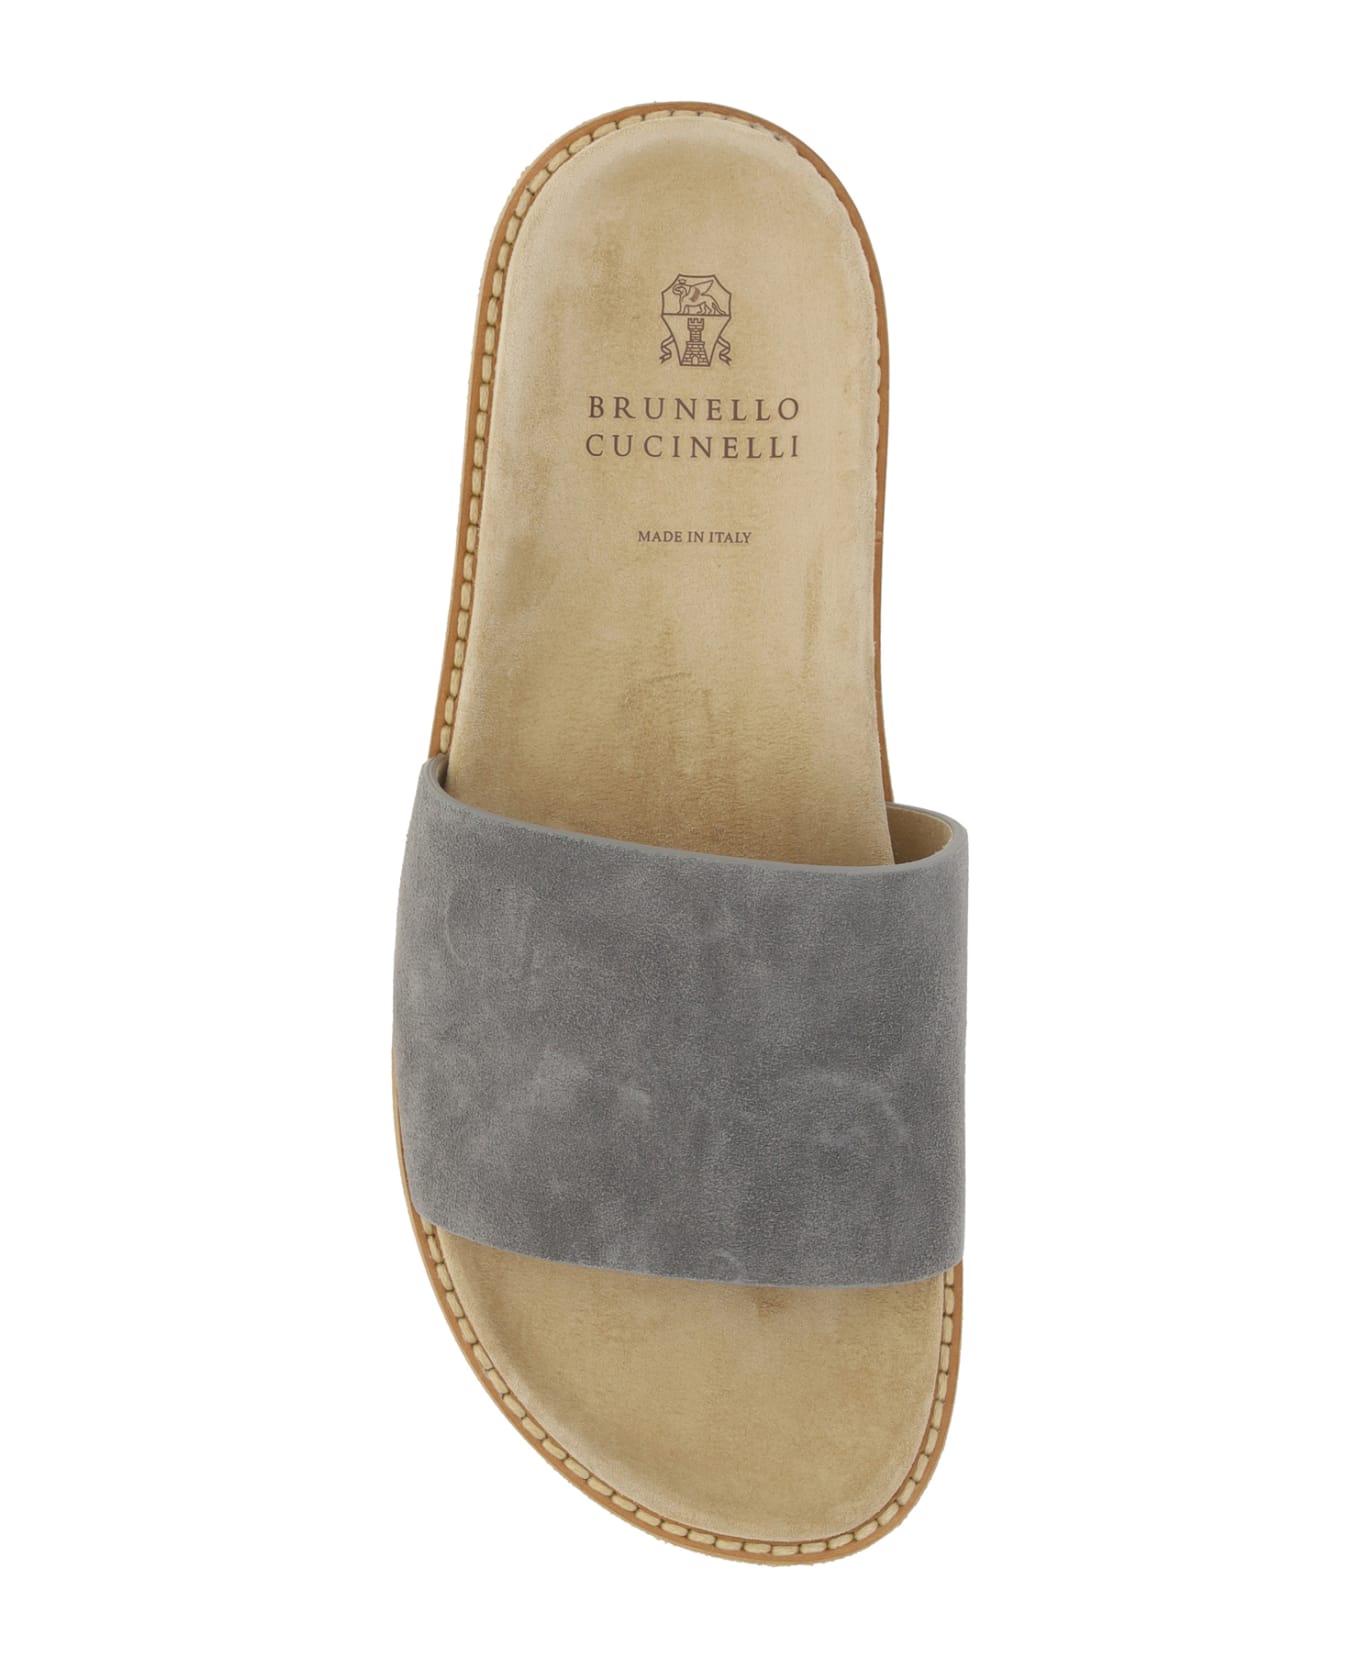 Brunello Cucinelli Sandals - Fumo+camel